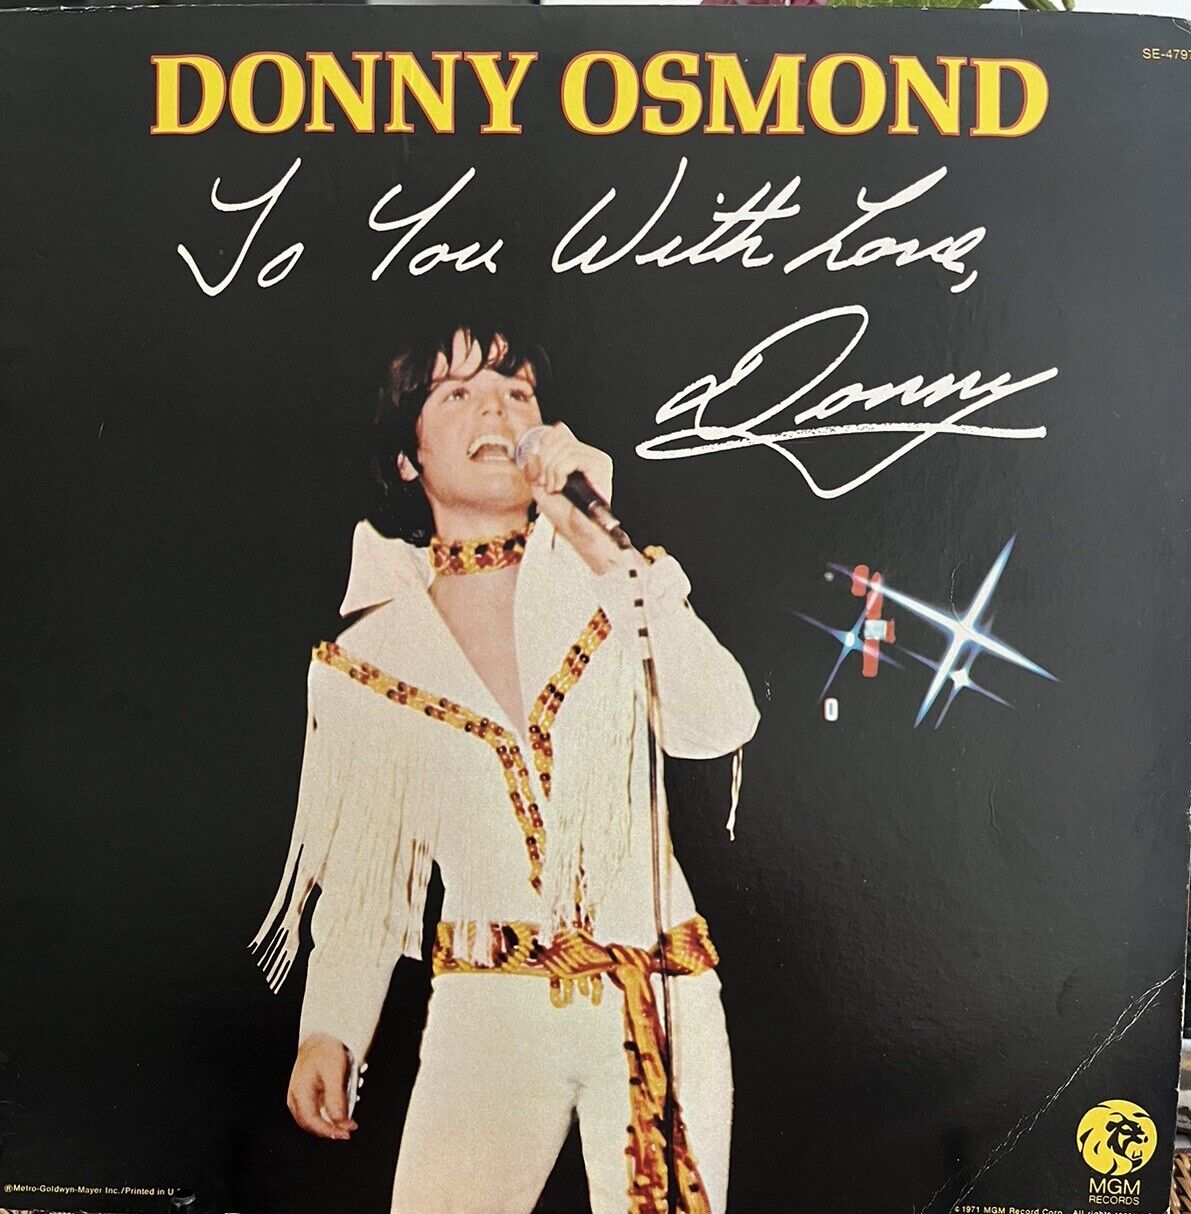 Vintage 1971 Donny Osmond To You With Love, Donny SE-4797 Vinyl 33 LP Record NM